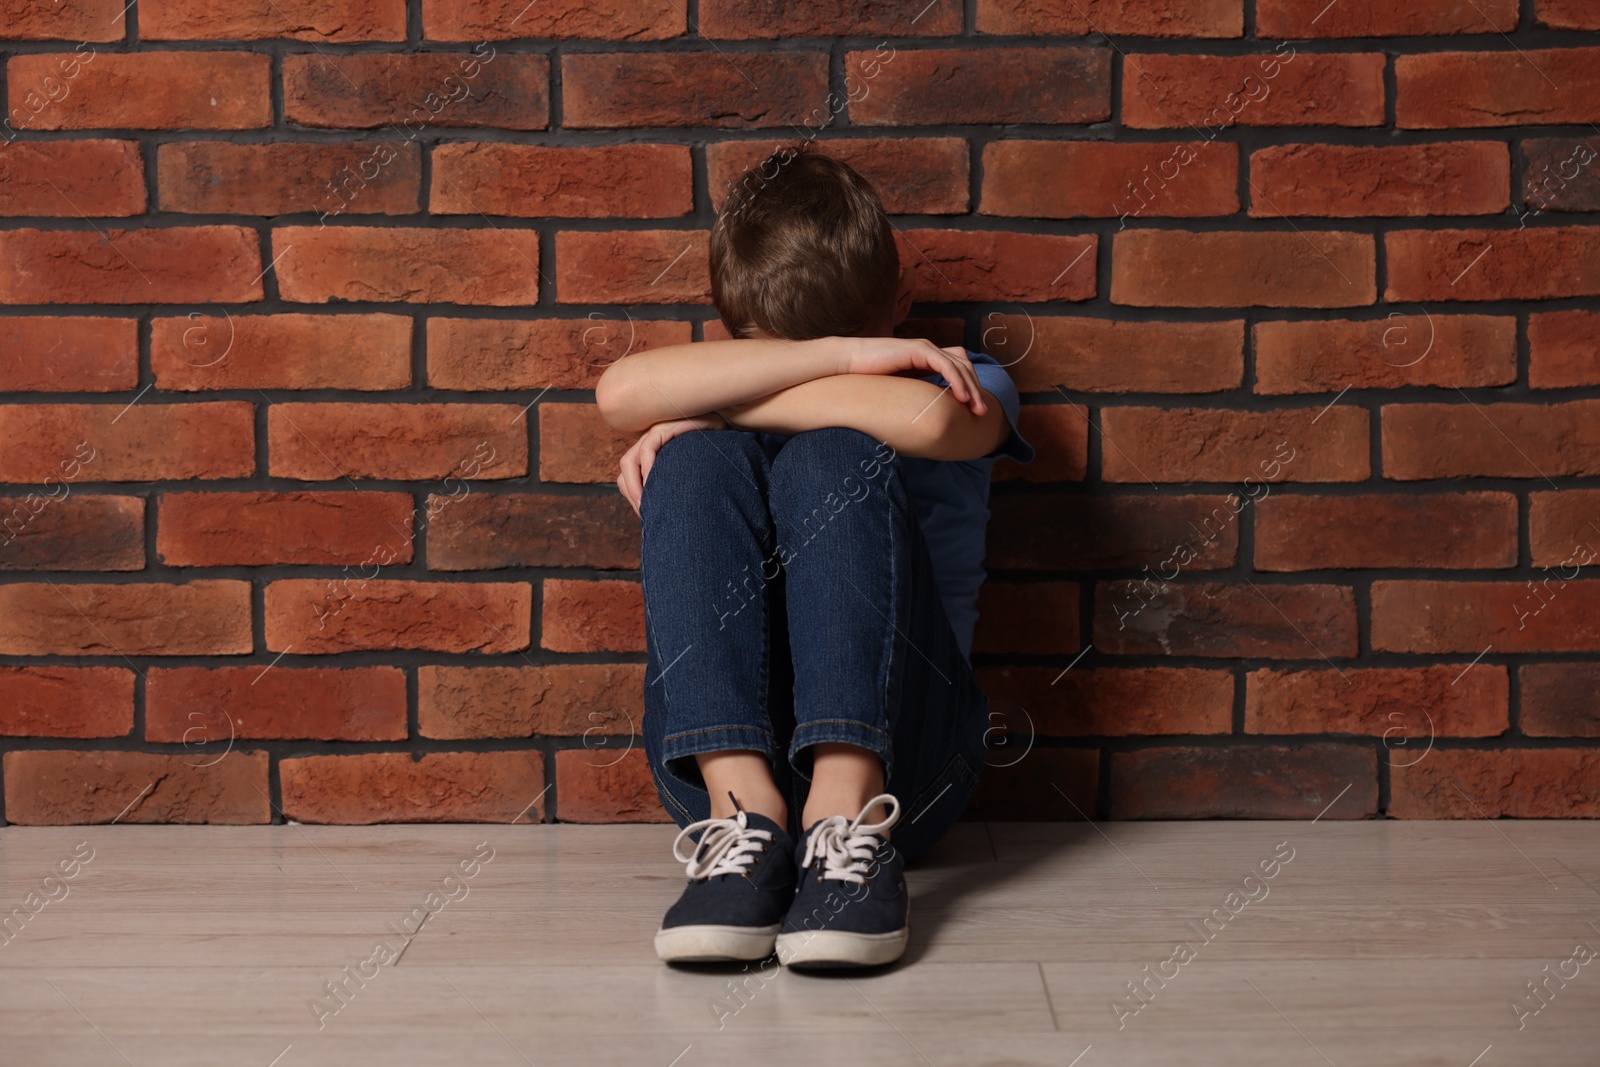 Photo of Child abuse. Upset boy sitting on floor near brick wall indoors